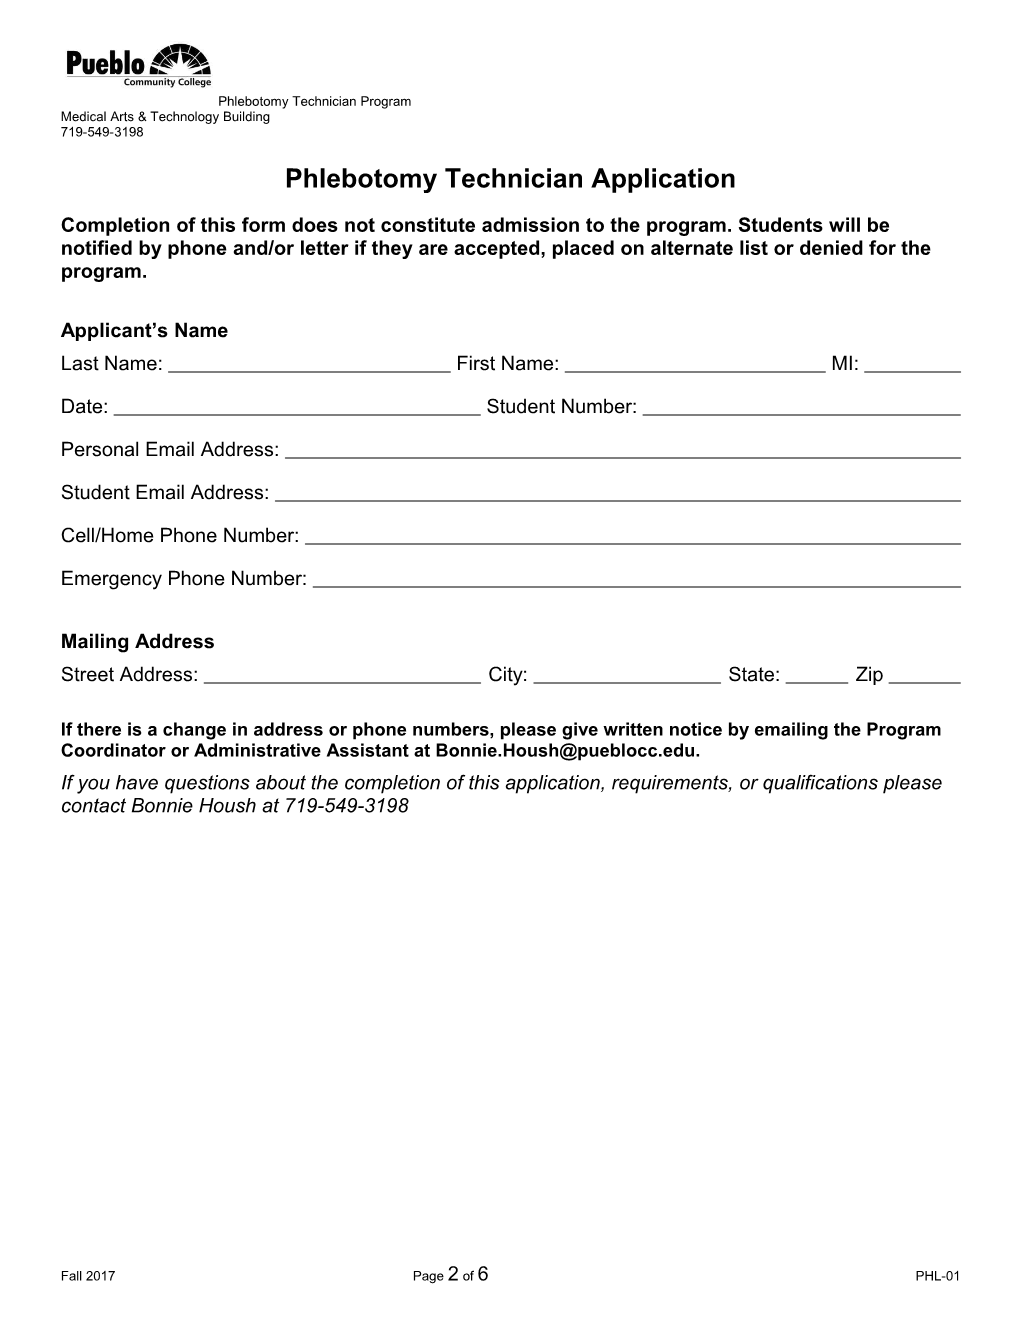 Phlebotomy Technician Program Application